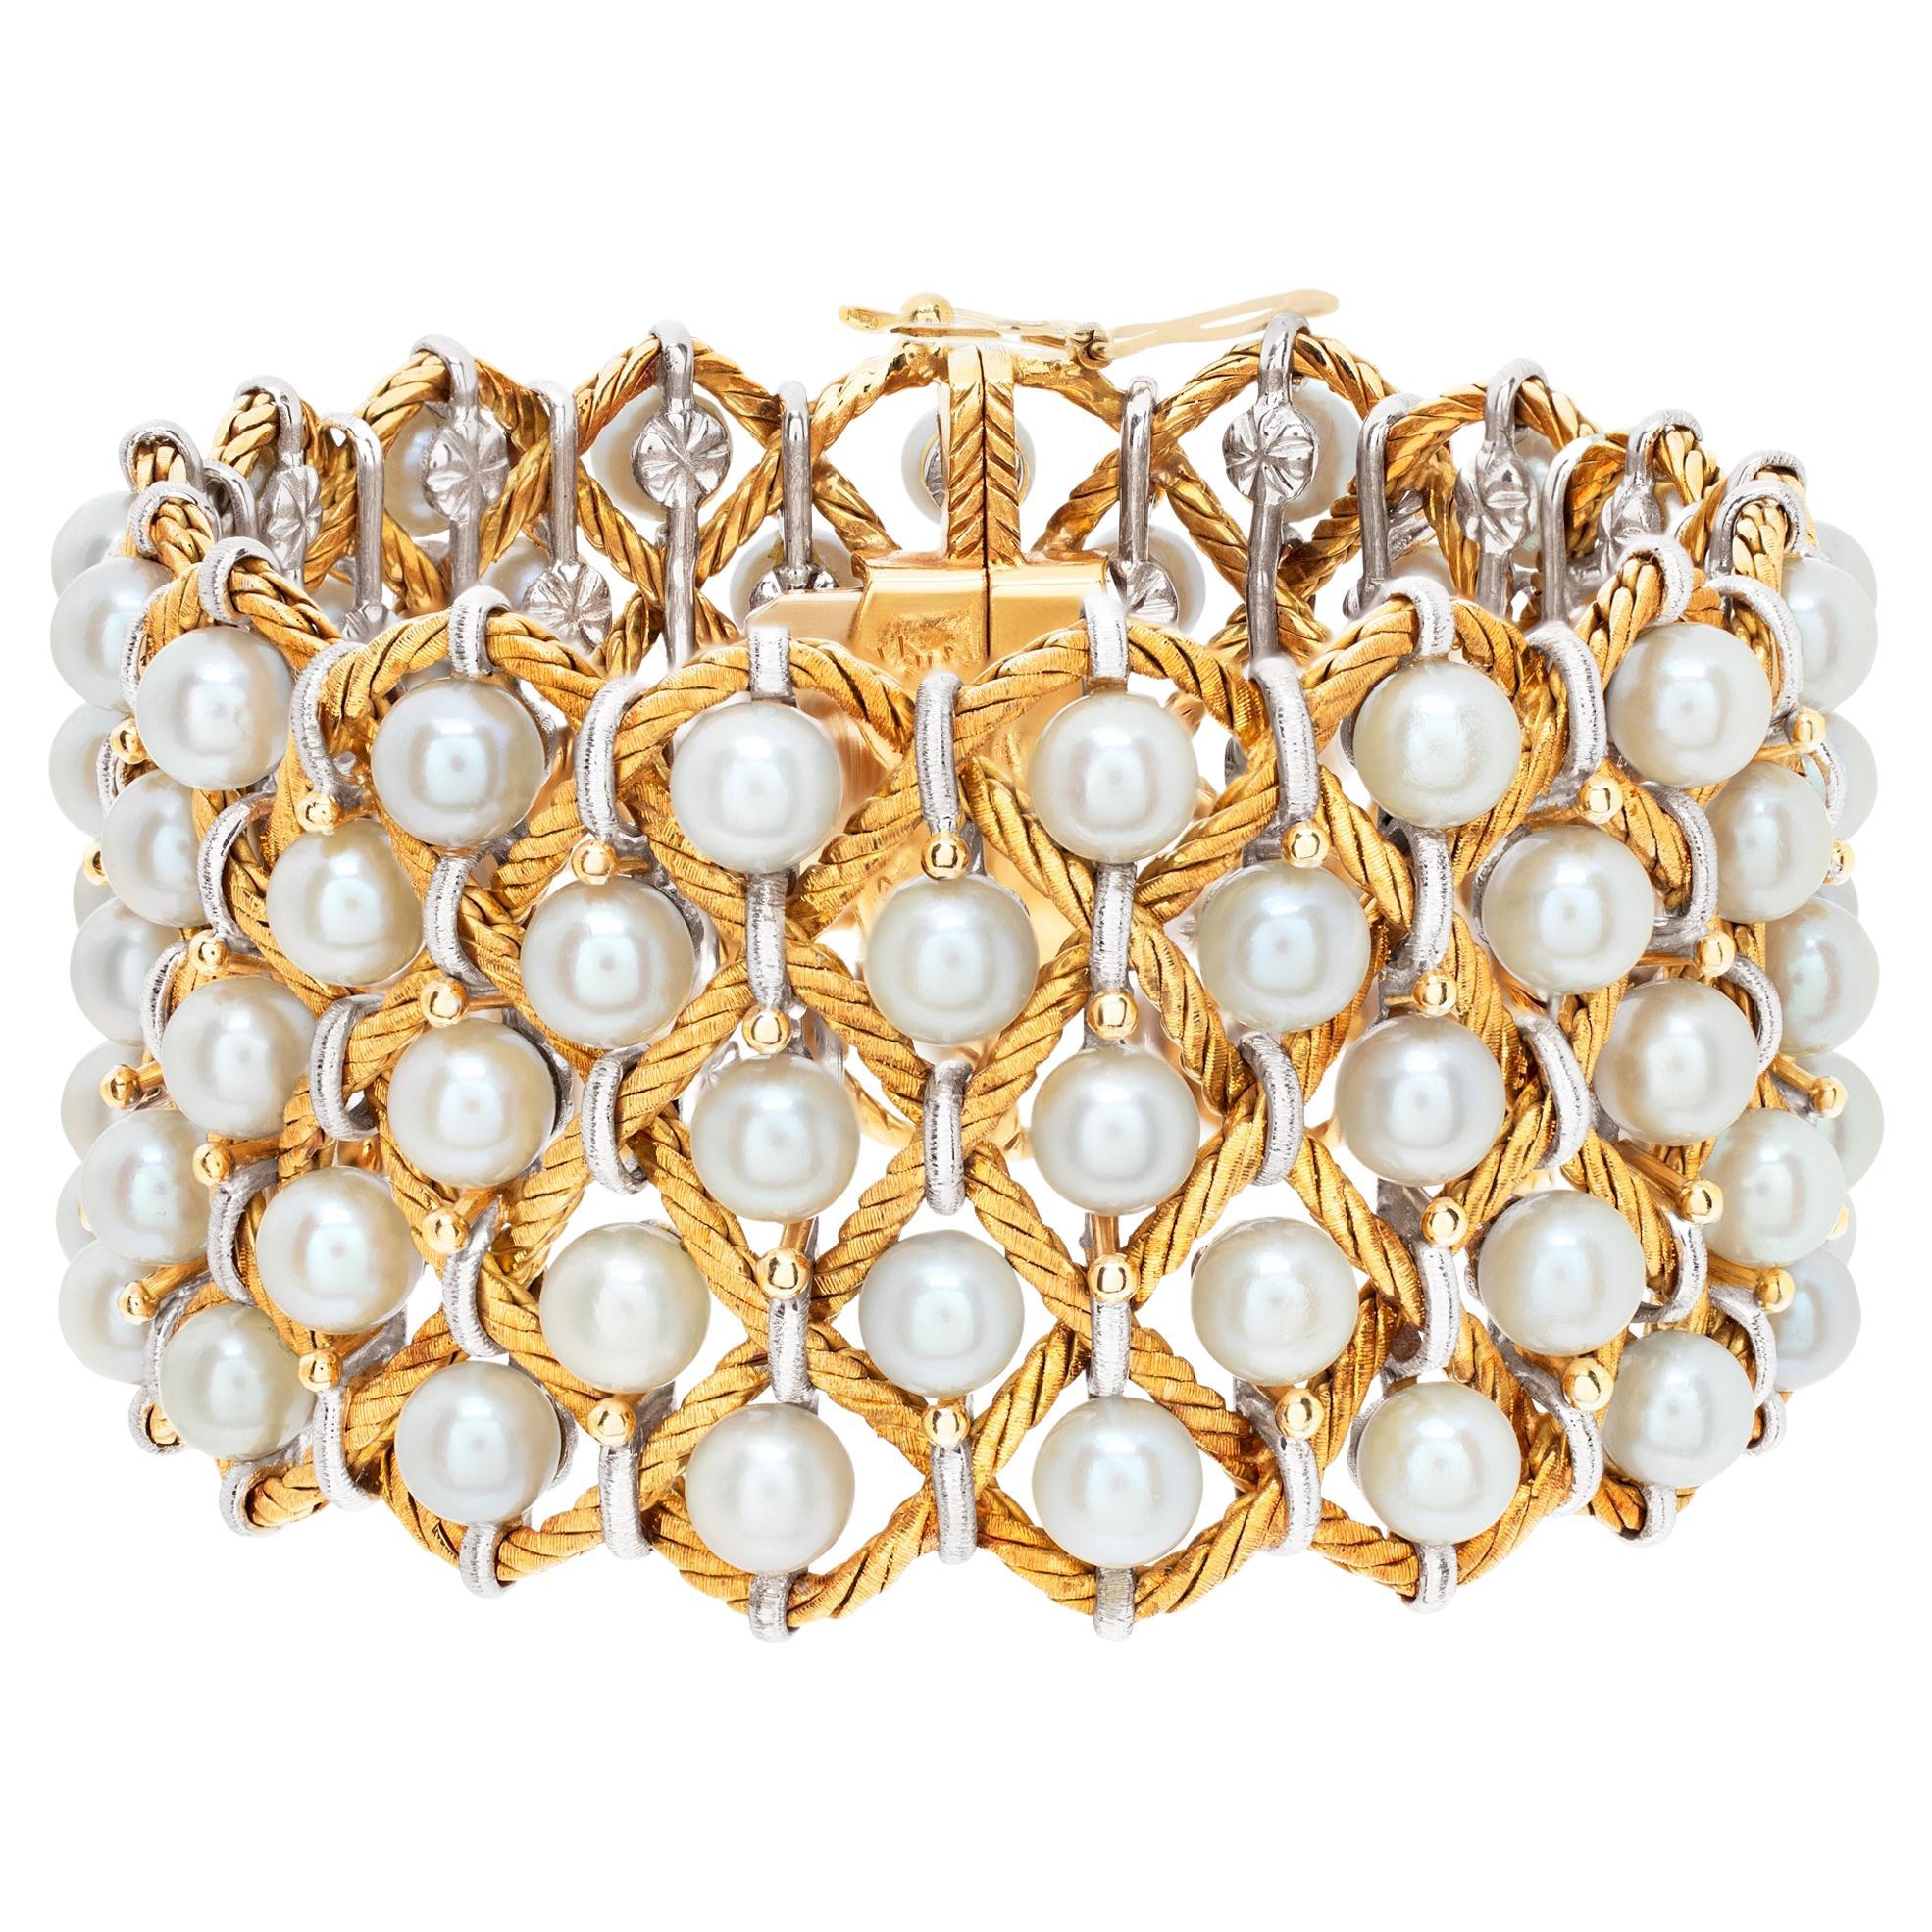 Buccellati Pearl Bracelet in 18k White & Yellow Gold